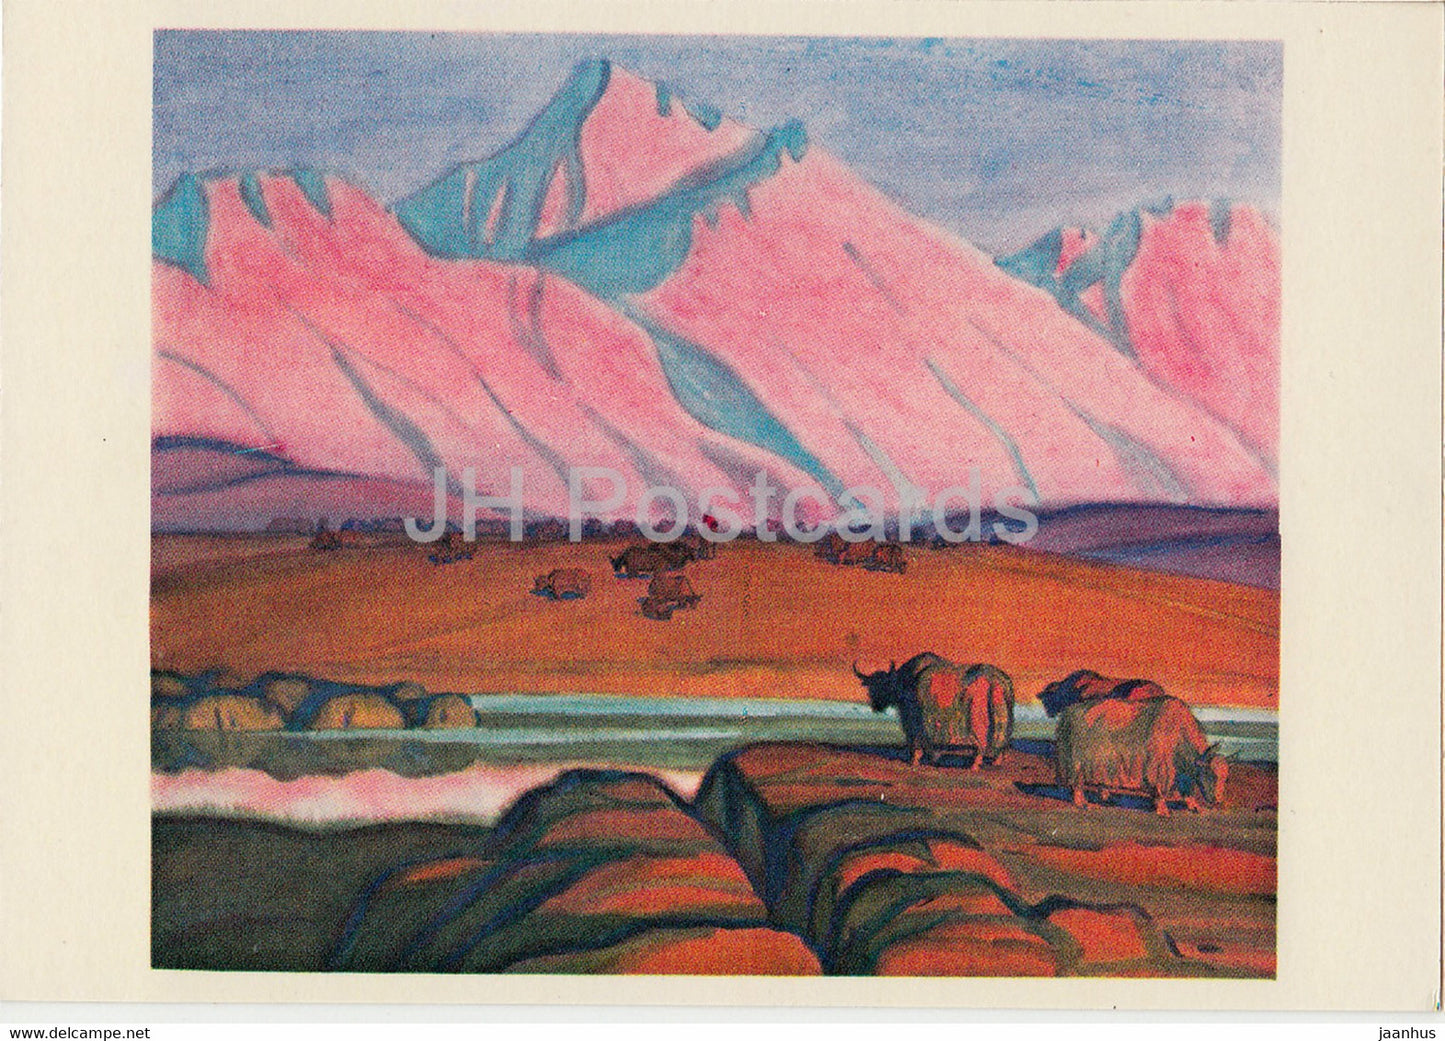 across Kyrgyzstan by V. Rogachev - Alay Range - illustration - 1979 - Russia USSR - unused - JH Postcards